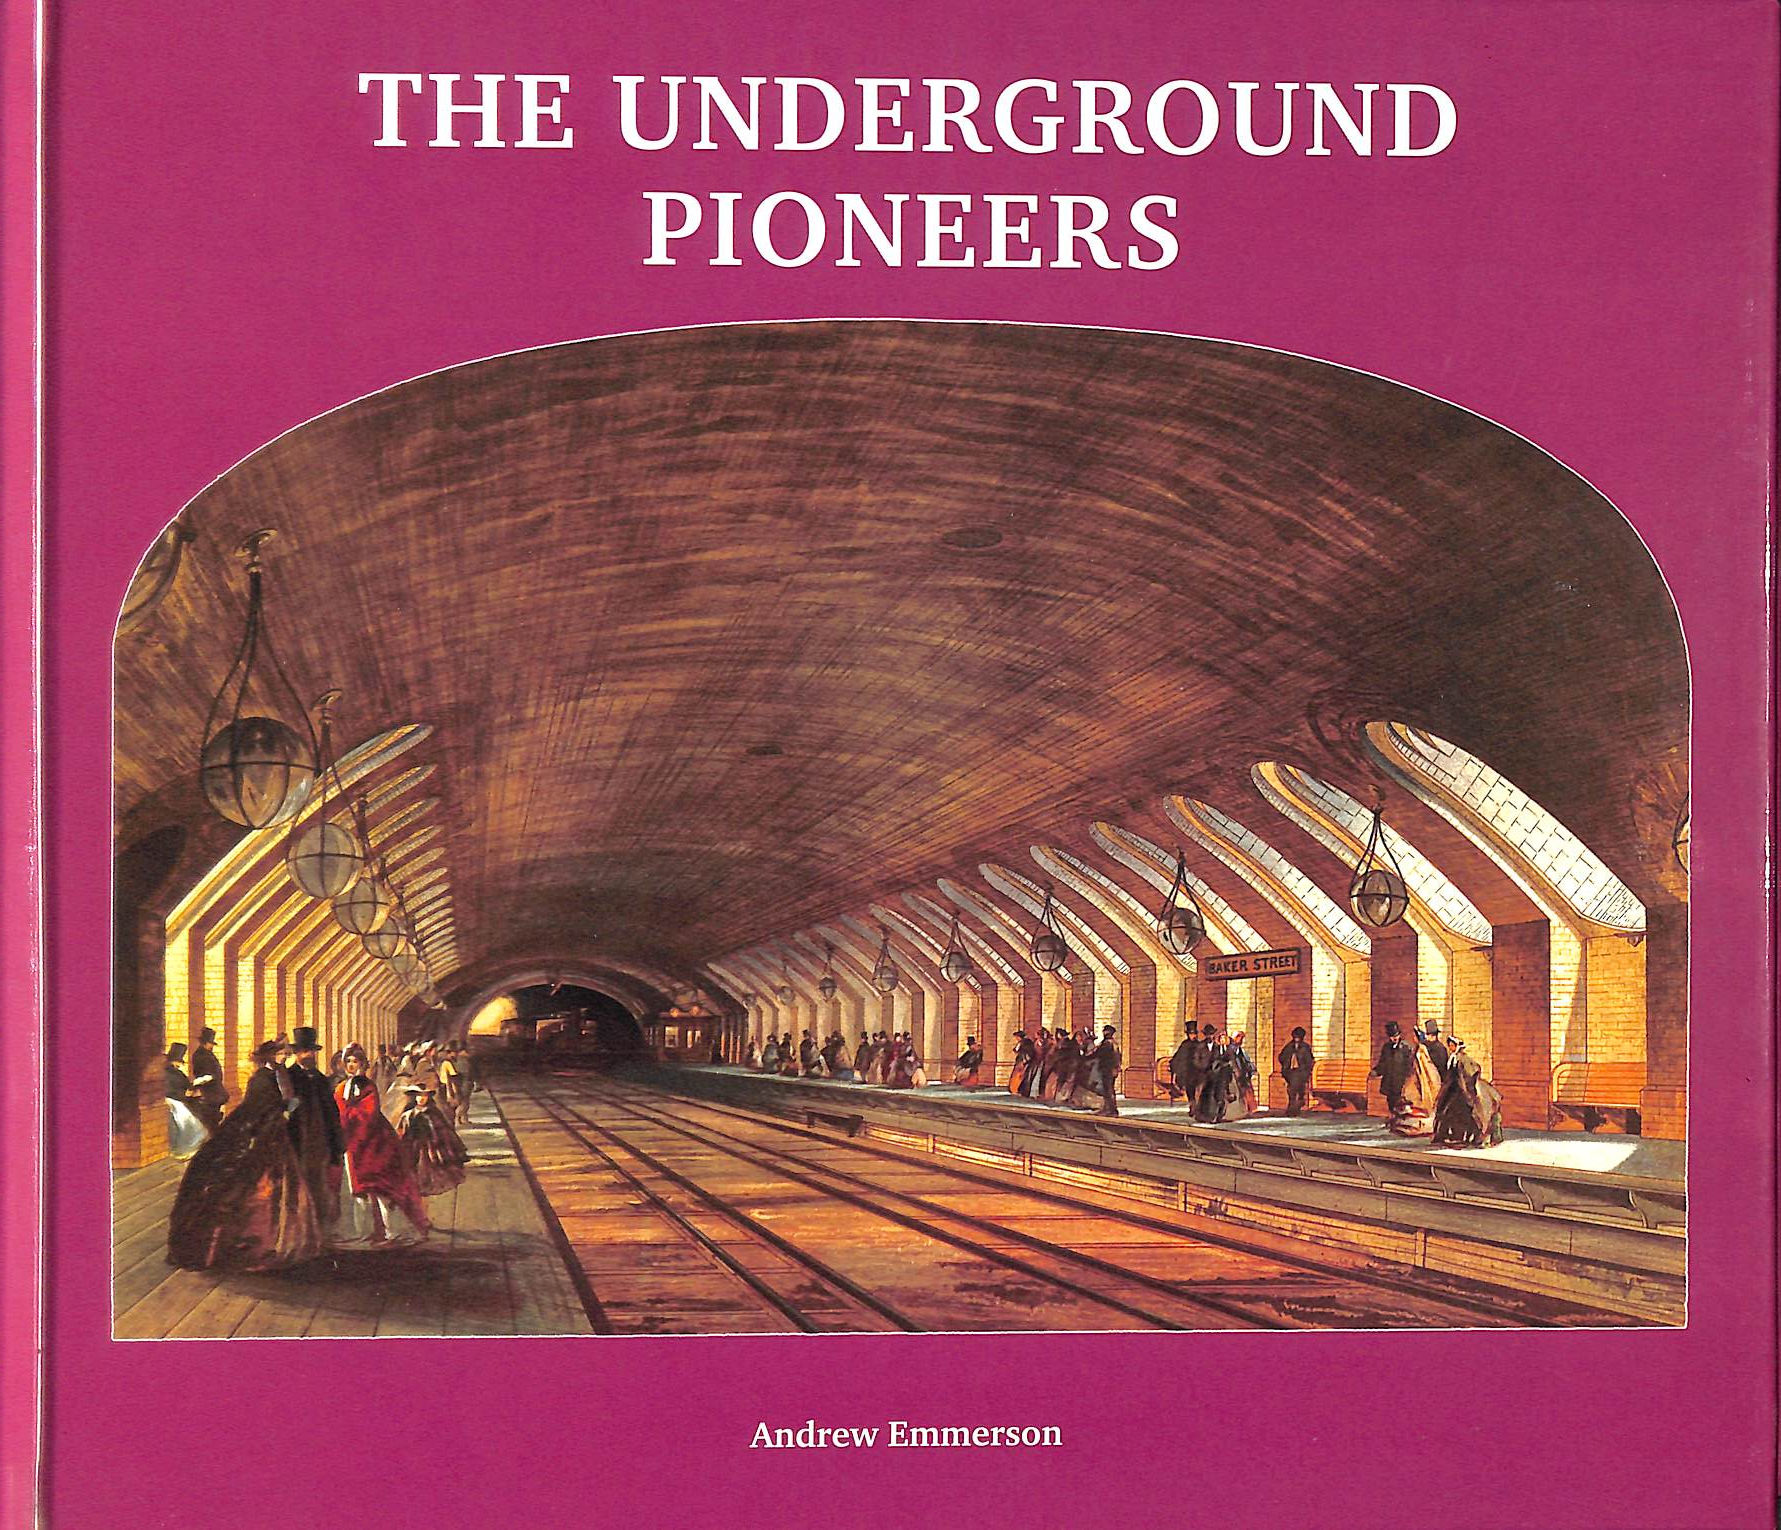 EMMERSON, ANDREW - The Underground Pioneers